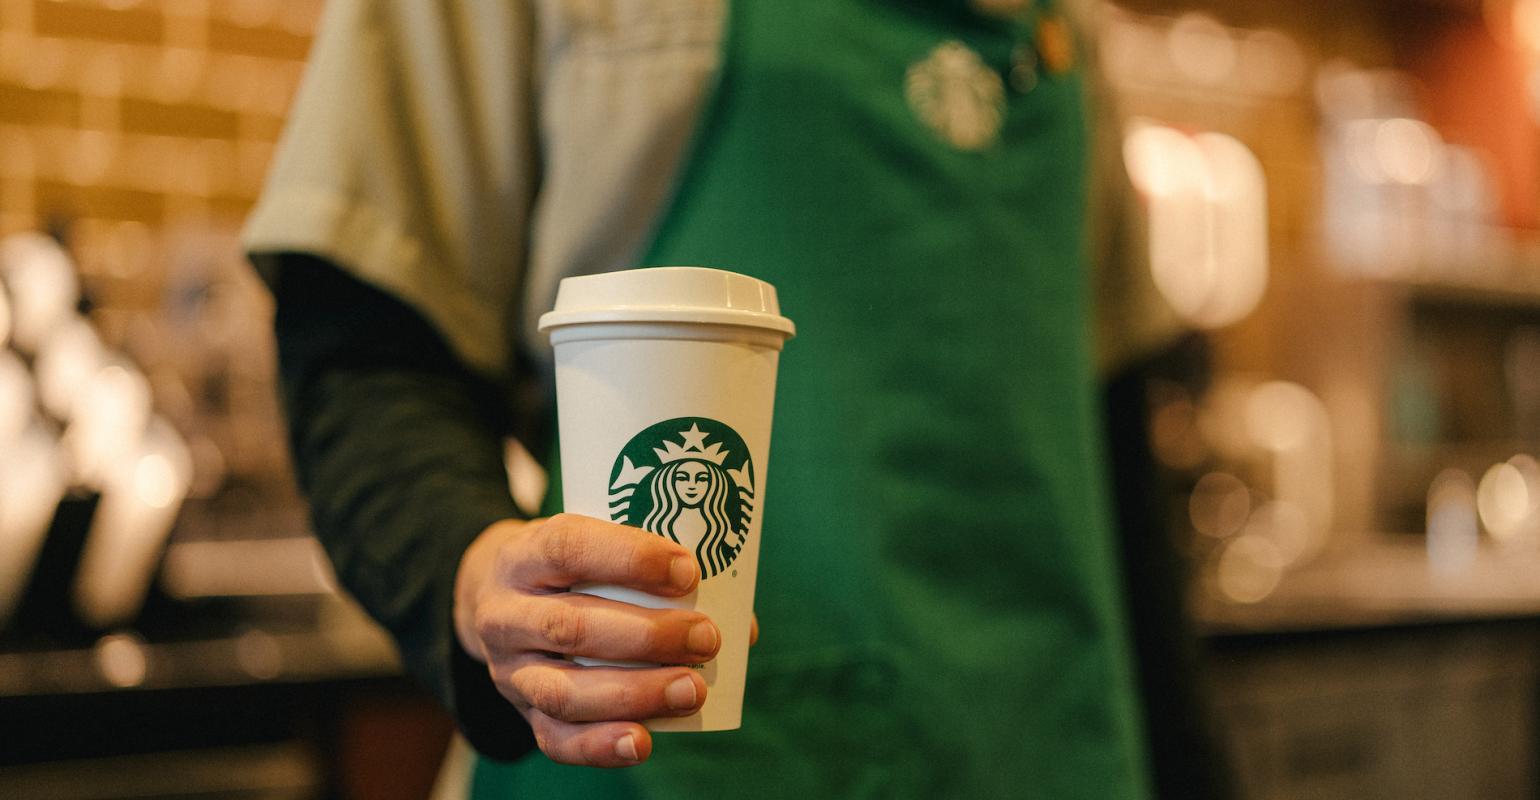 Starbucks U.S. sets sales, gift card, mobile app records in Q1